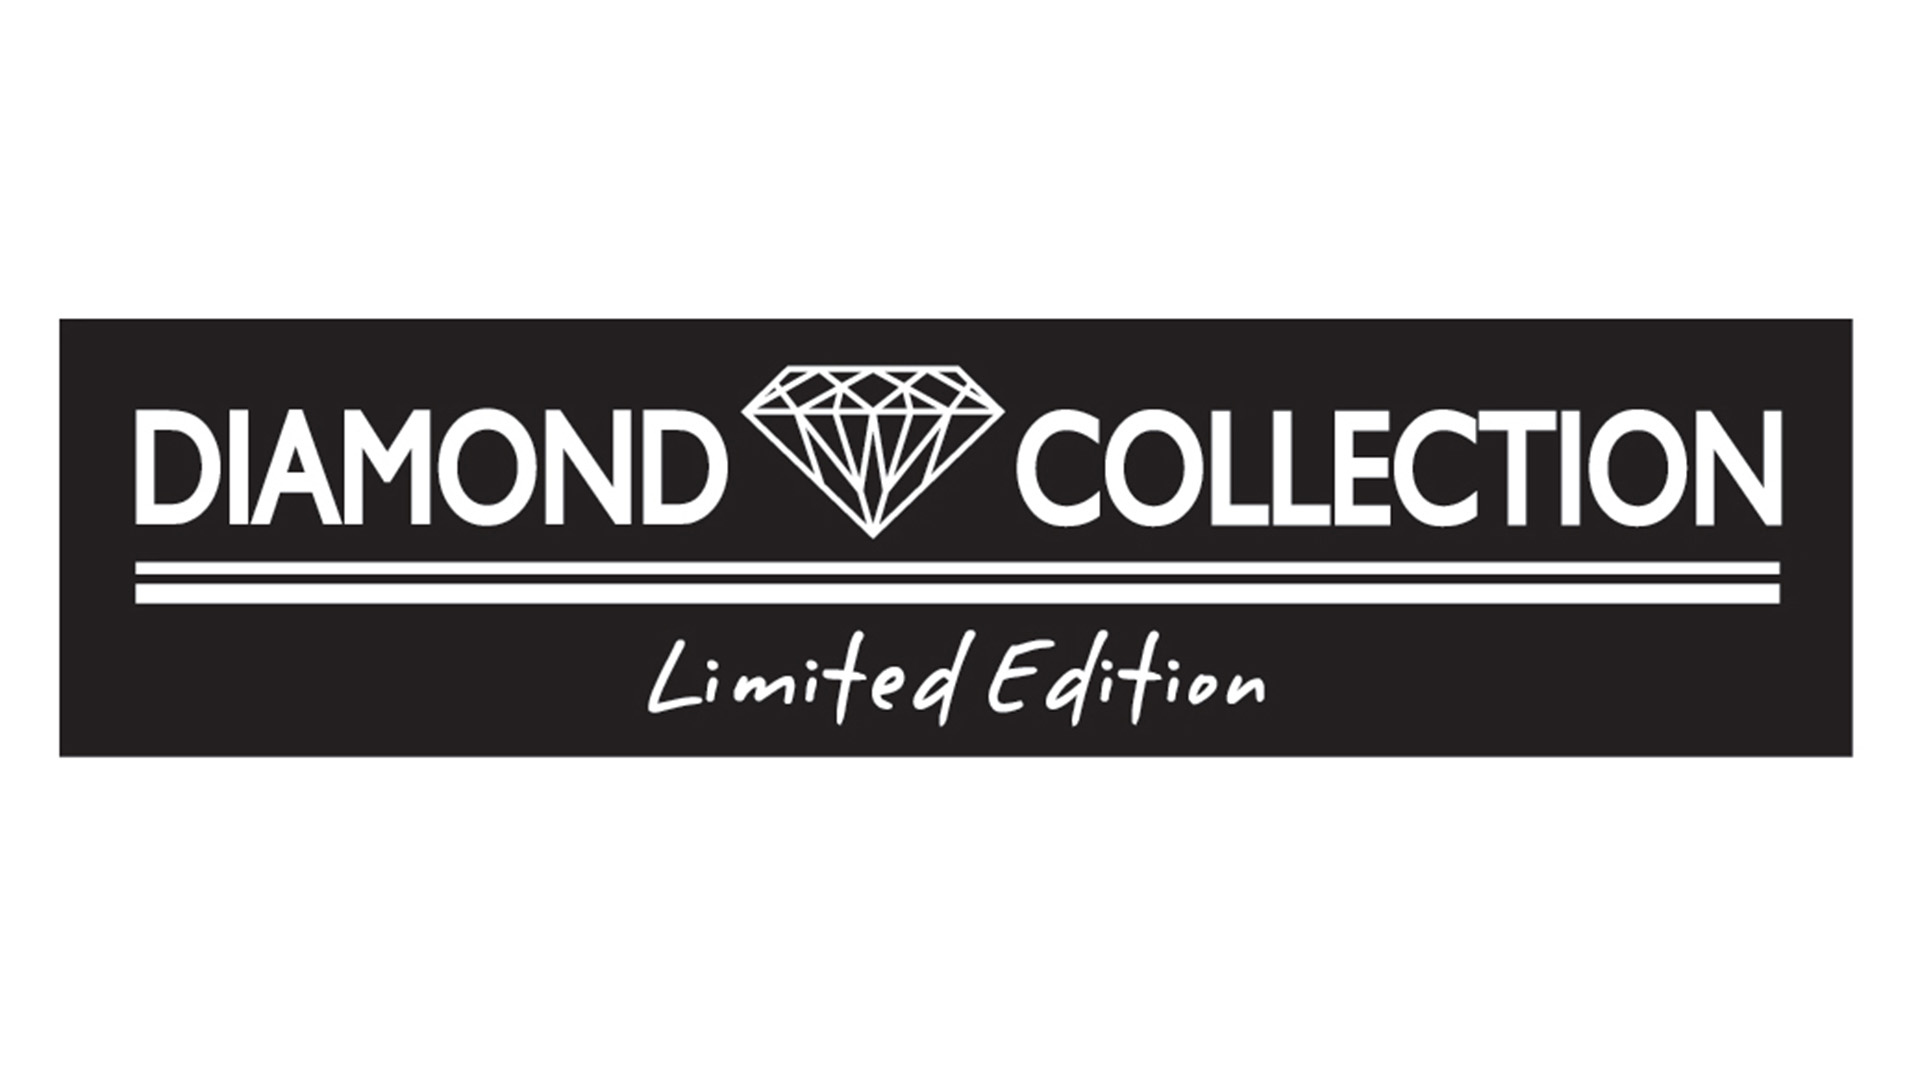 Bank Teak Limited Edition 198 x 40 x H45cm - Diamond Collection